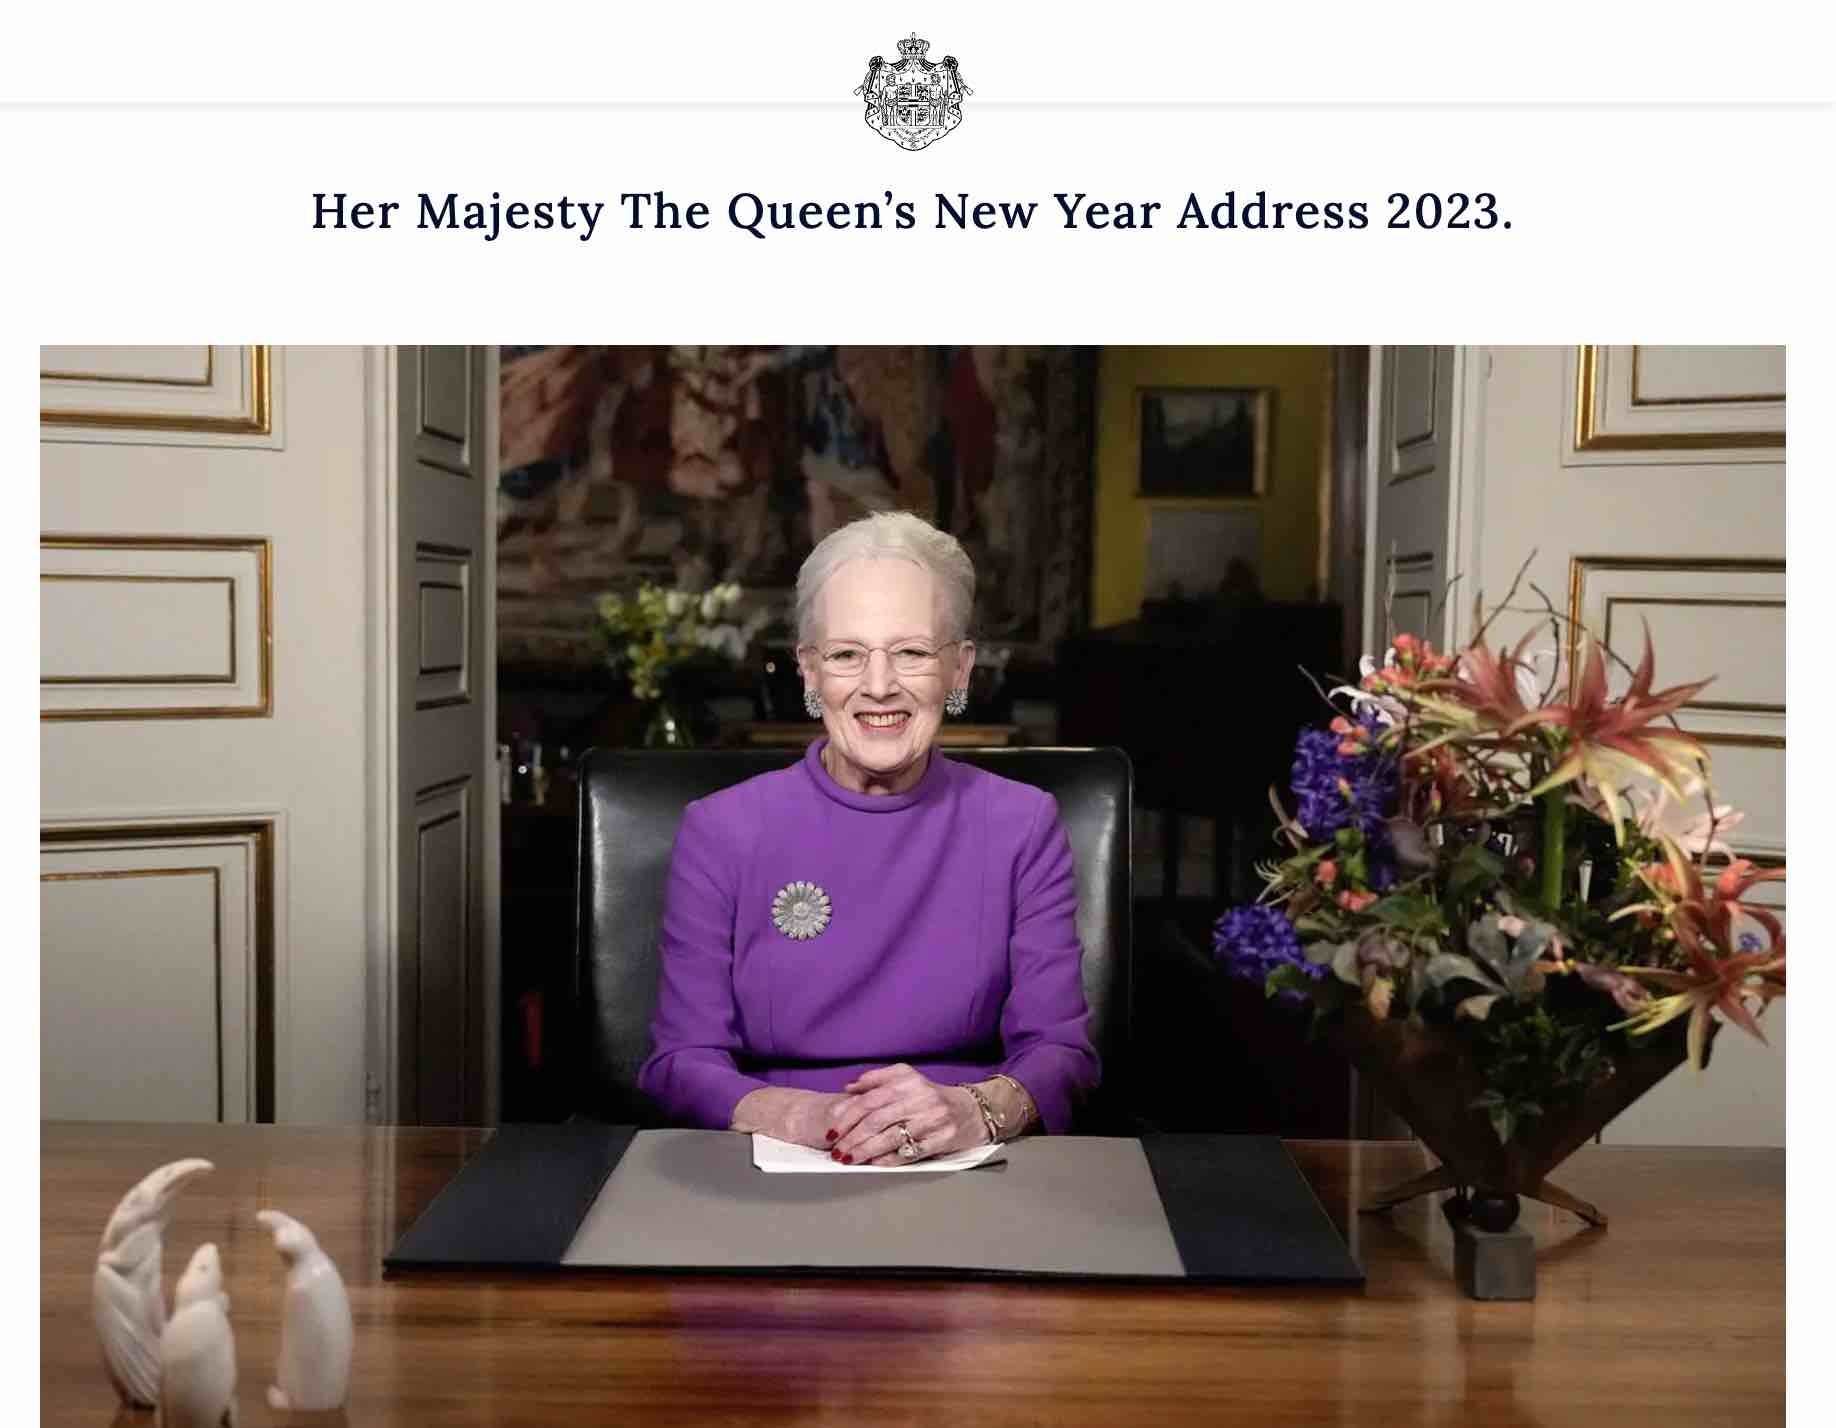 Queen Margrethes New Year Address 2023